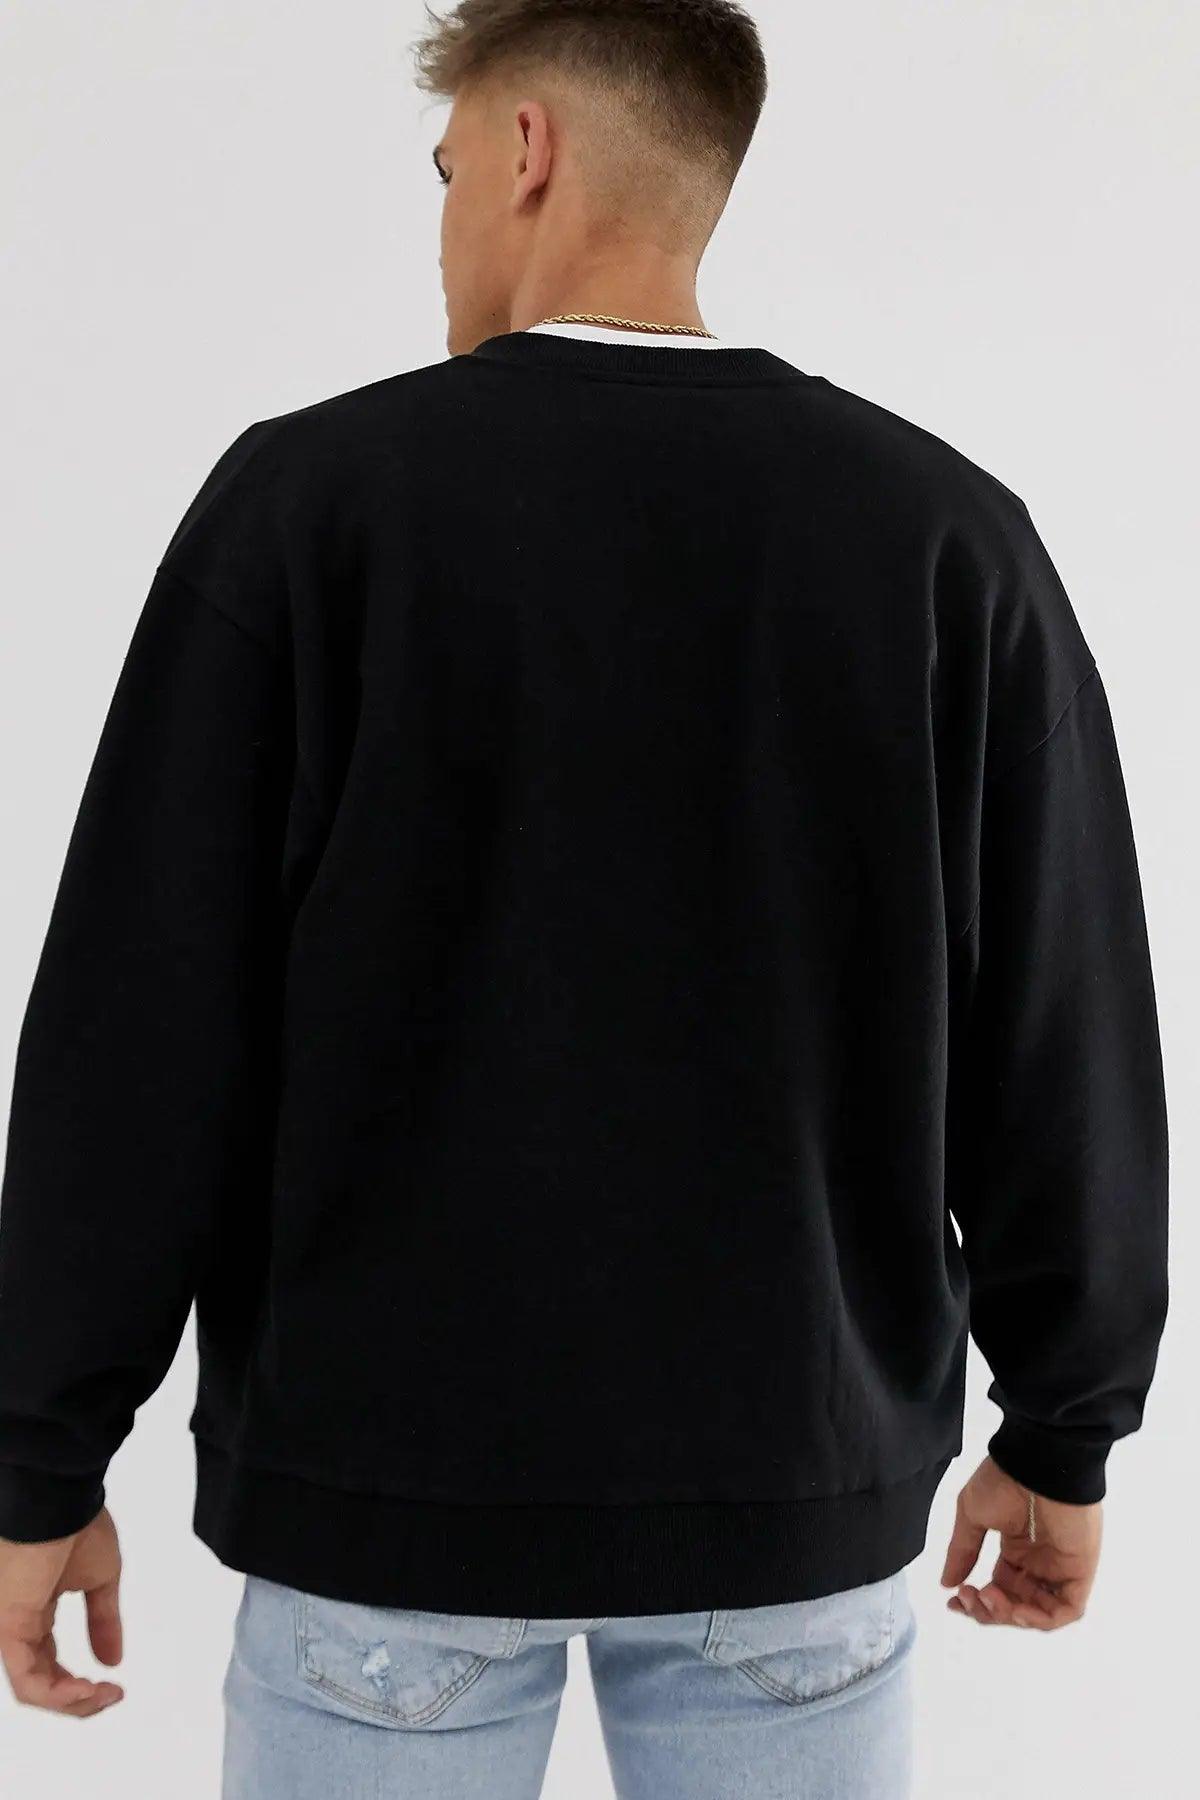 Blessed Oversize Erkek Sweatshirt - PΛSΛGE